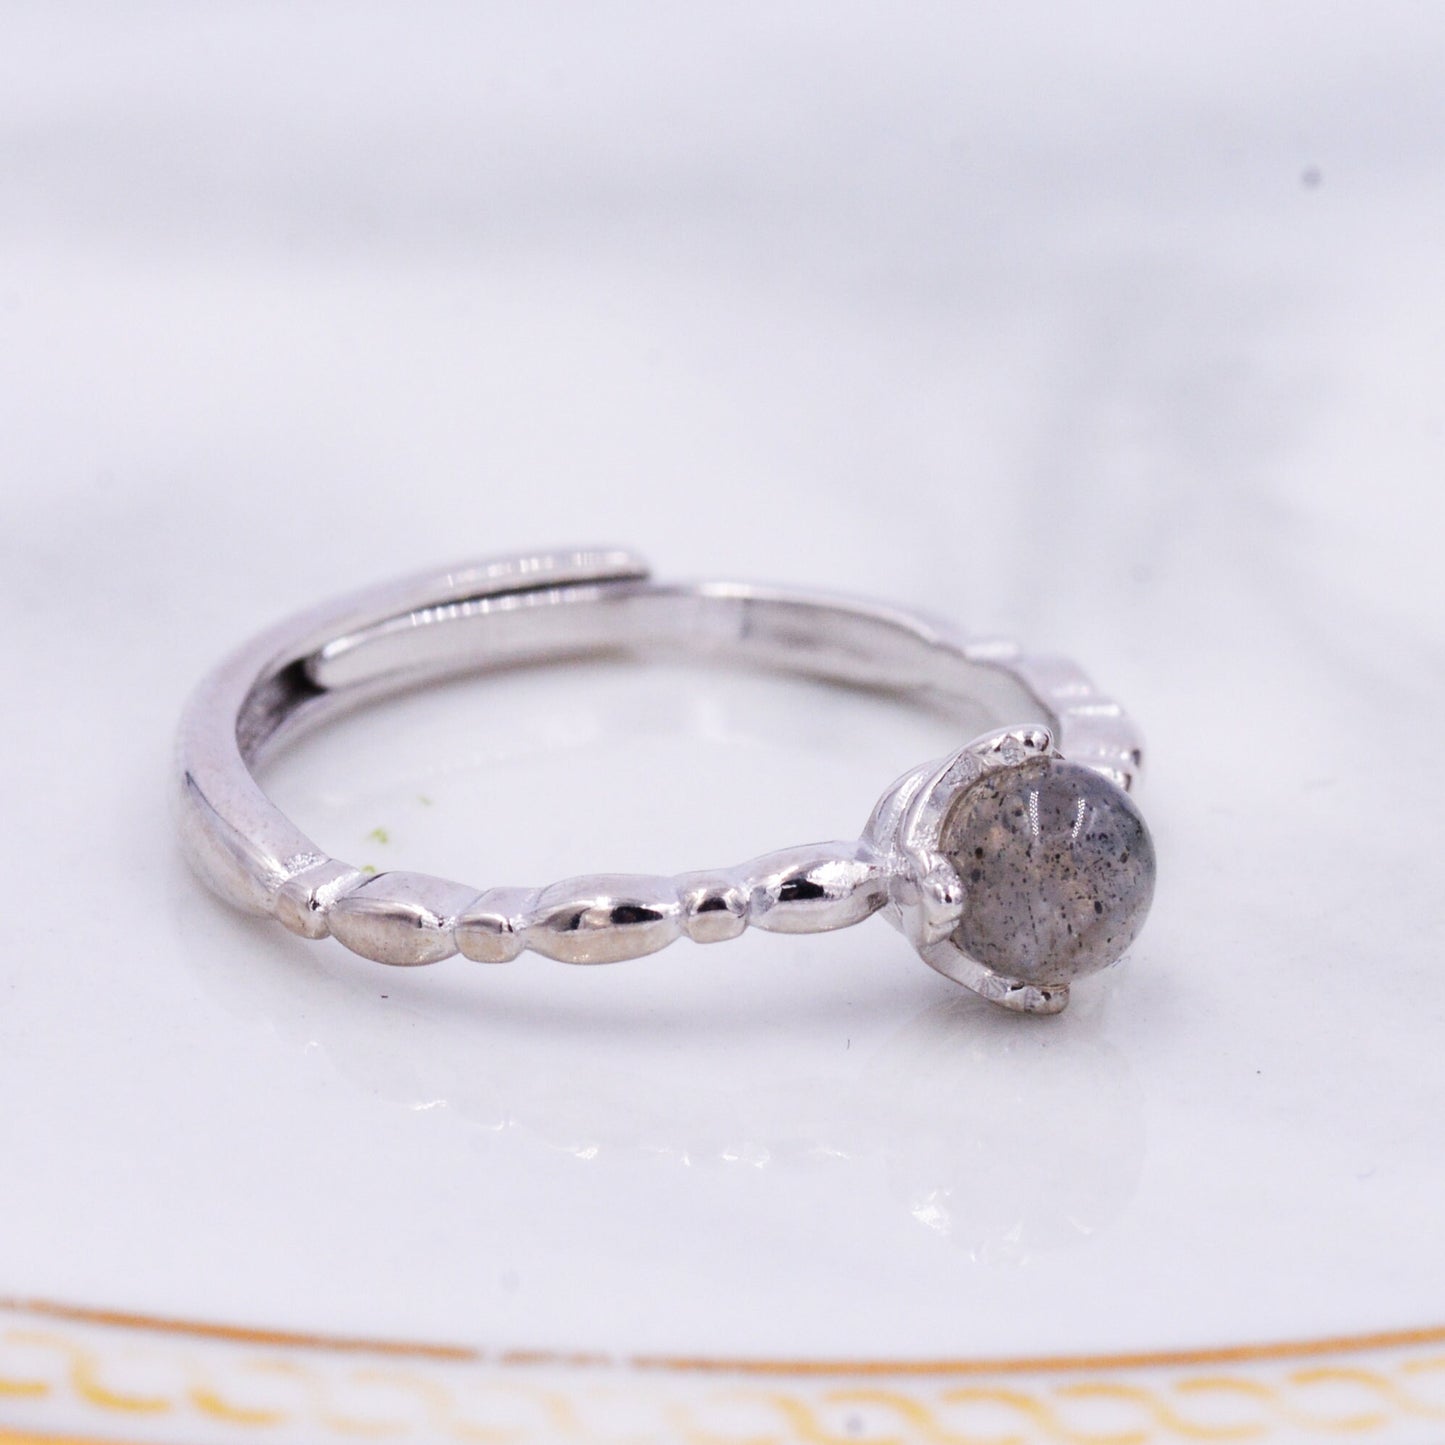 Sterling Silver Labradorite Gemstone Ring - Blue Flash - Adjustable Size - Semiprecious Natural Stone Jewellery